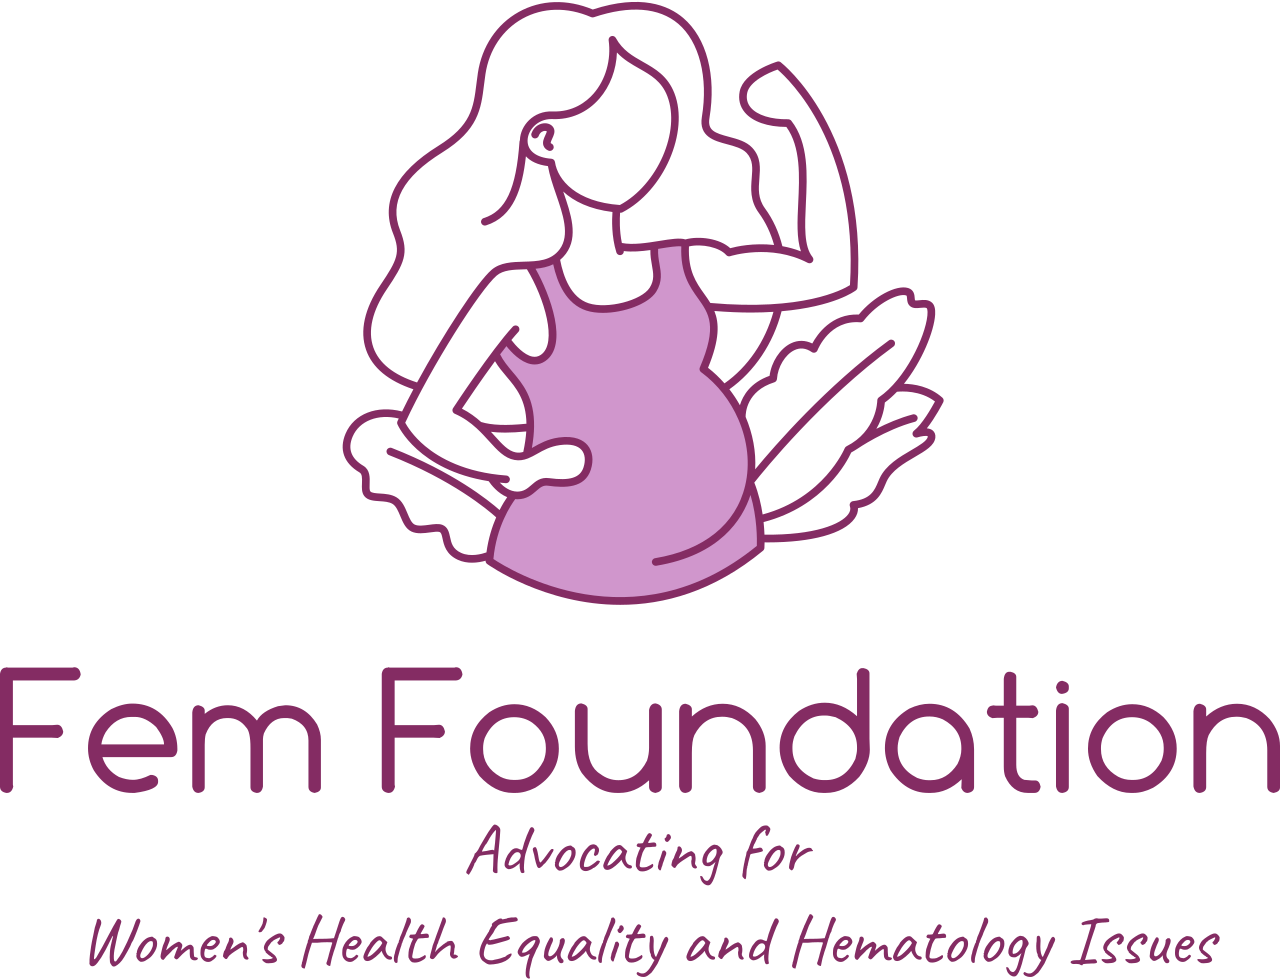 Fem Foundation's logo